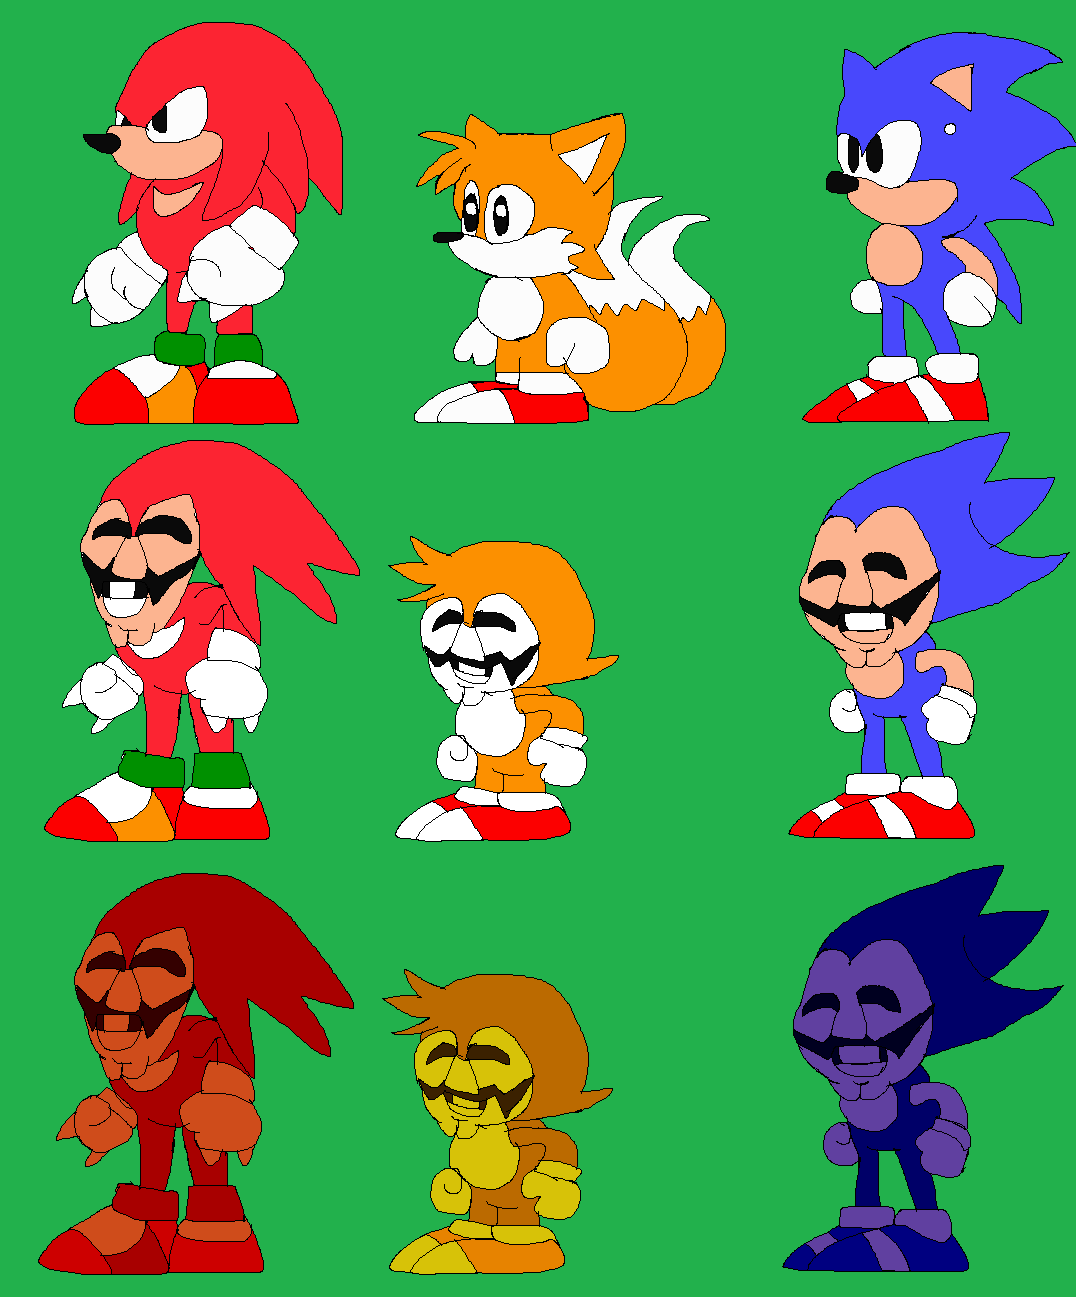 Sonic 2 Remade - Majin Sonic Background 3 by Abbysek on DeviantArt